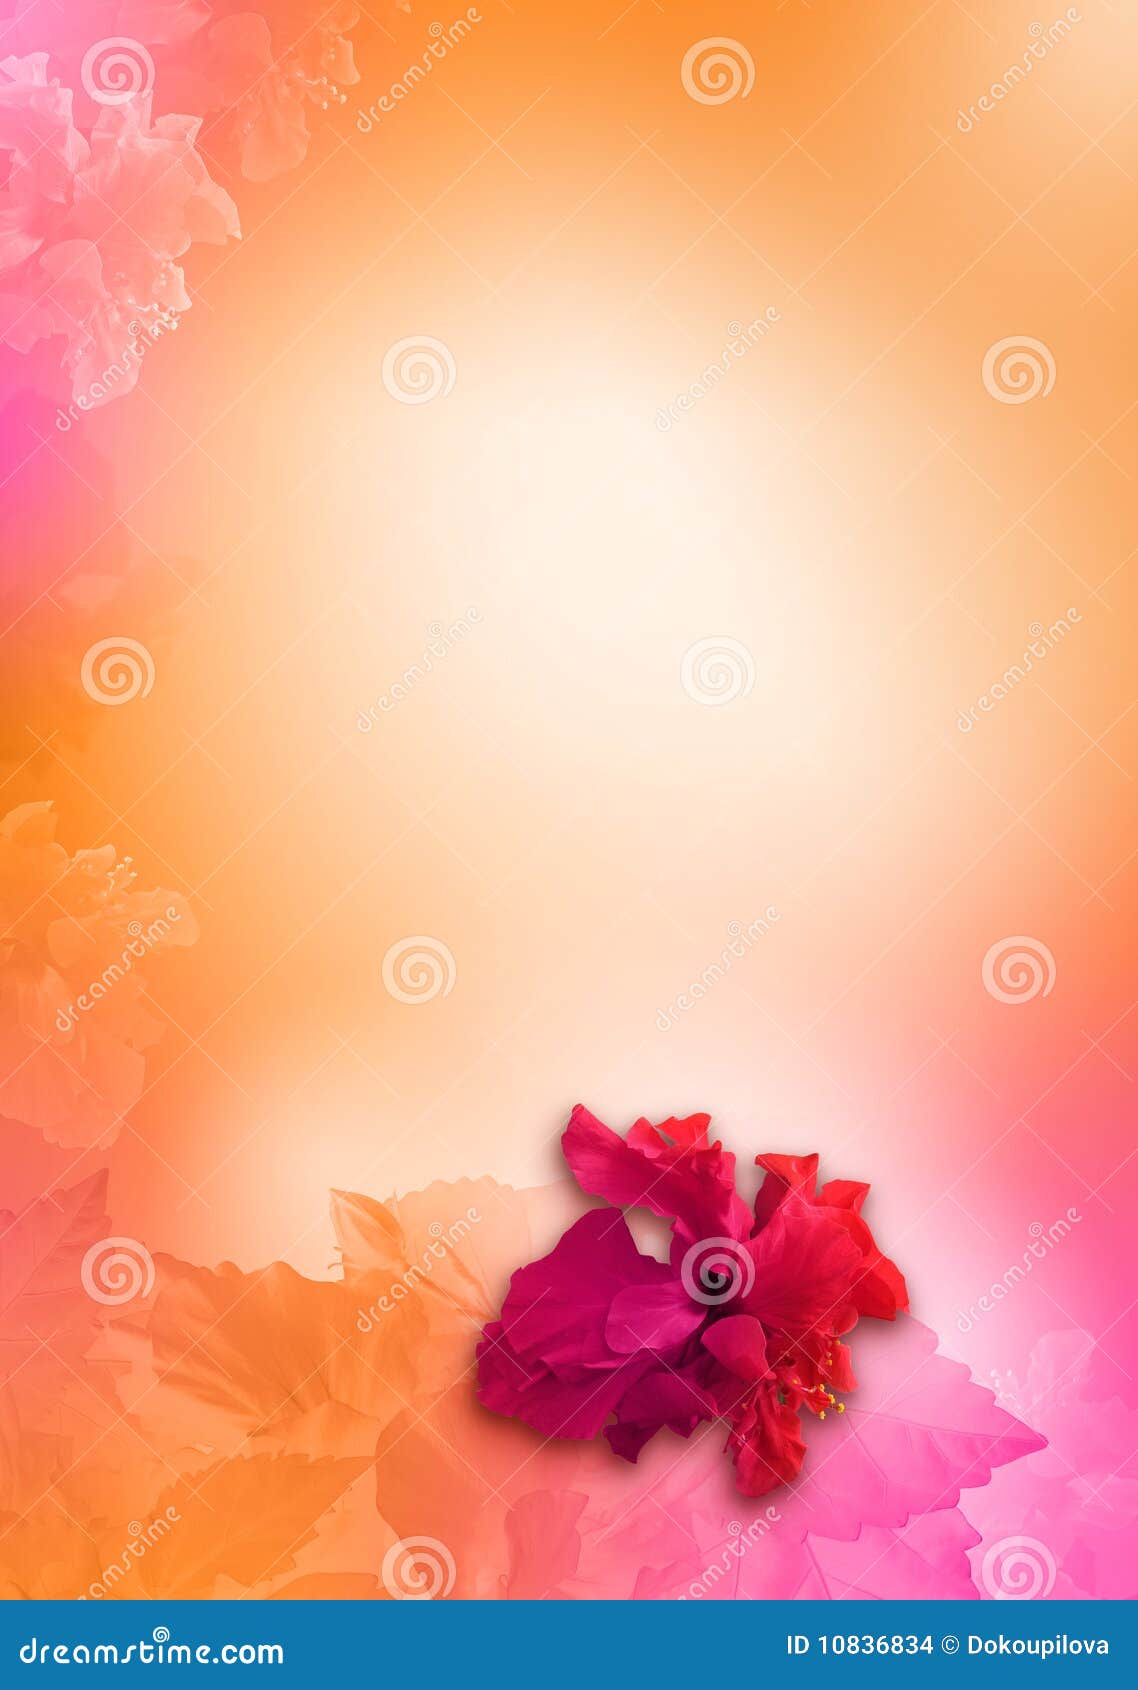 flowers background, orange, pink